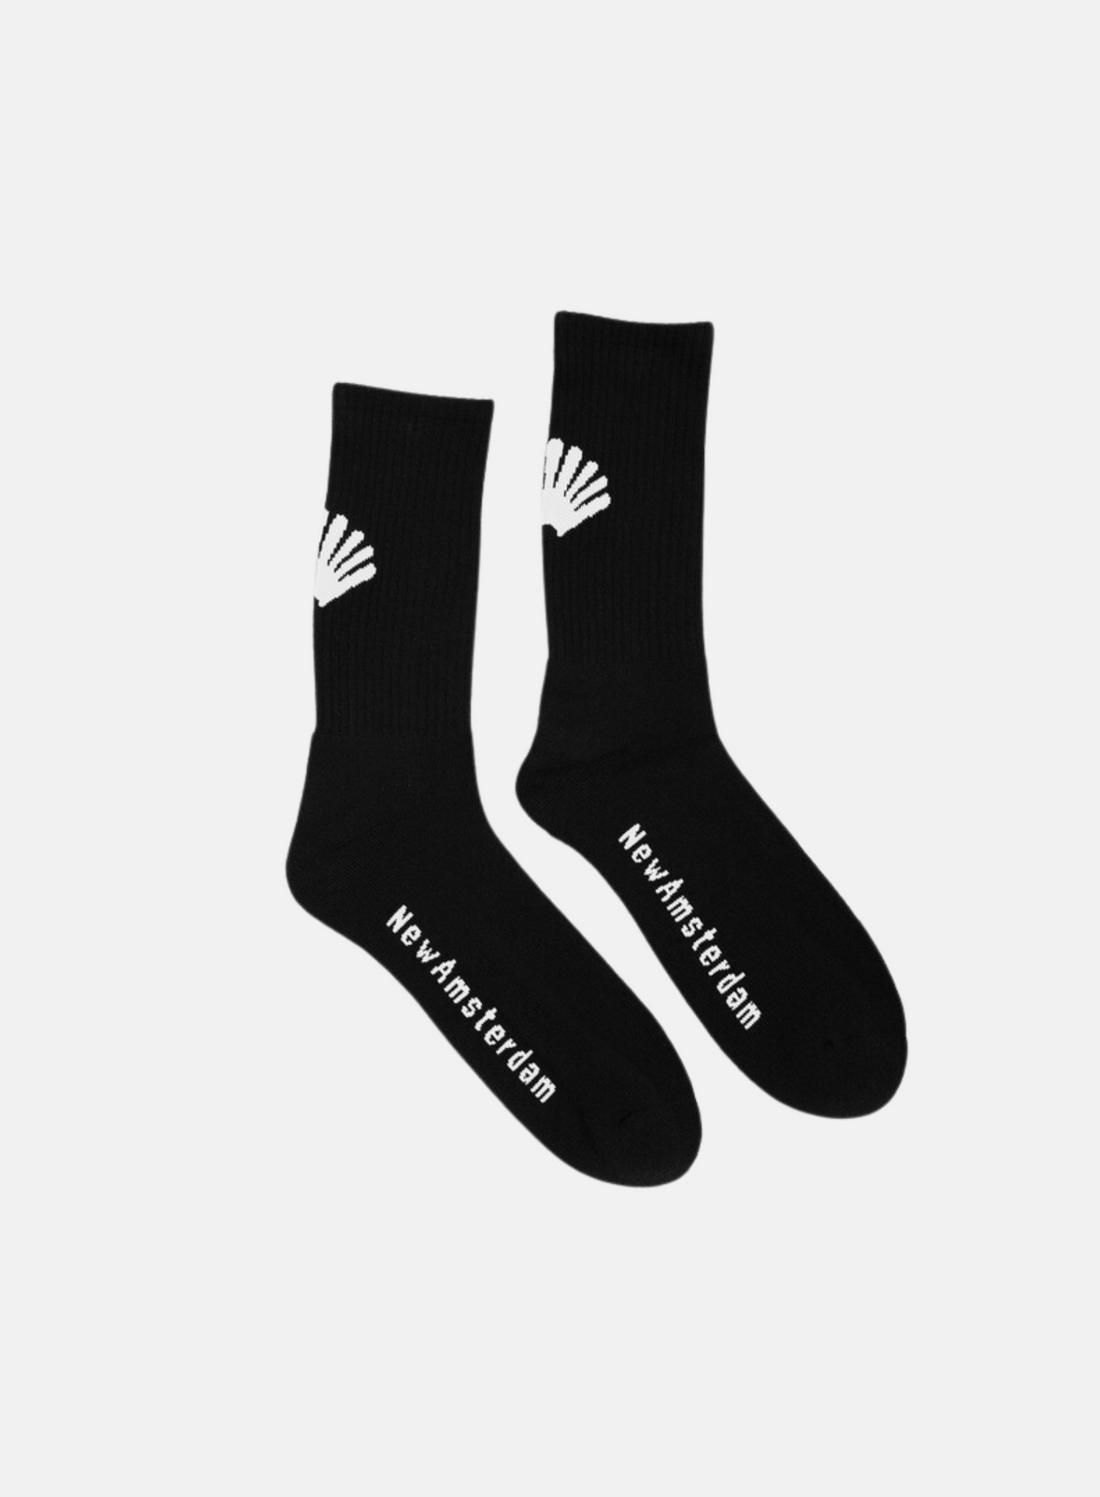 New Amsterdam Surf Association Logo Socks Black - Hympala Store 